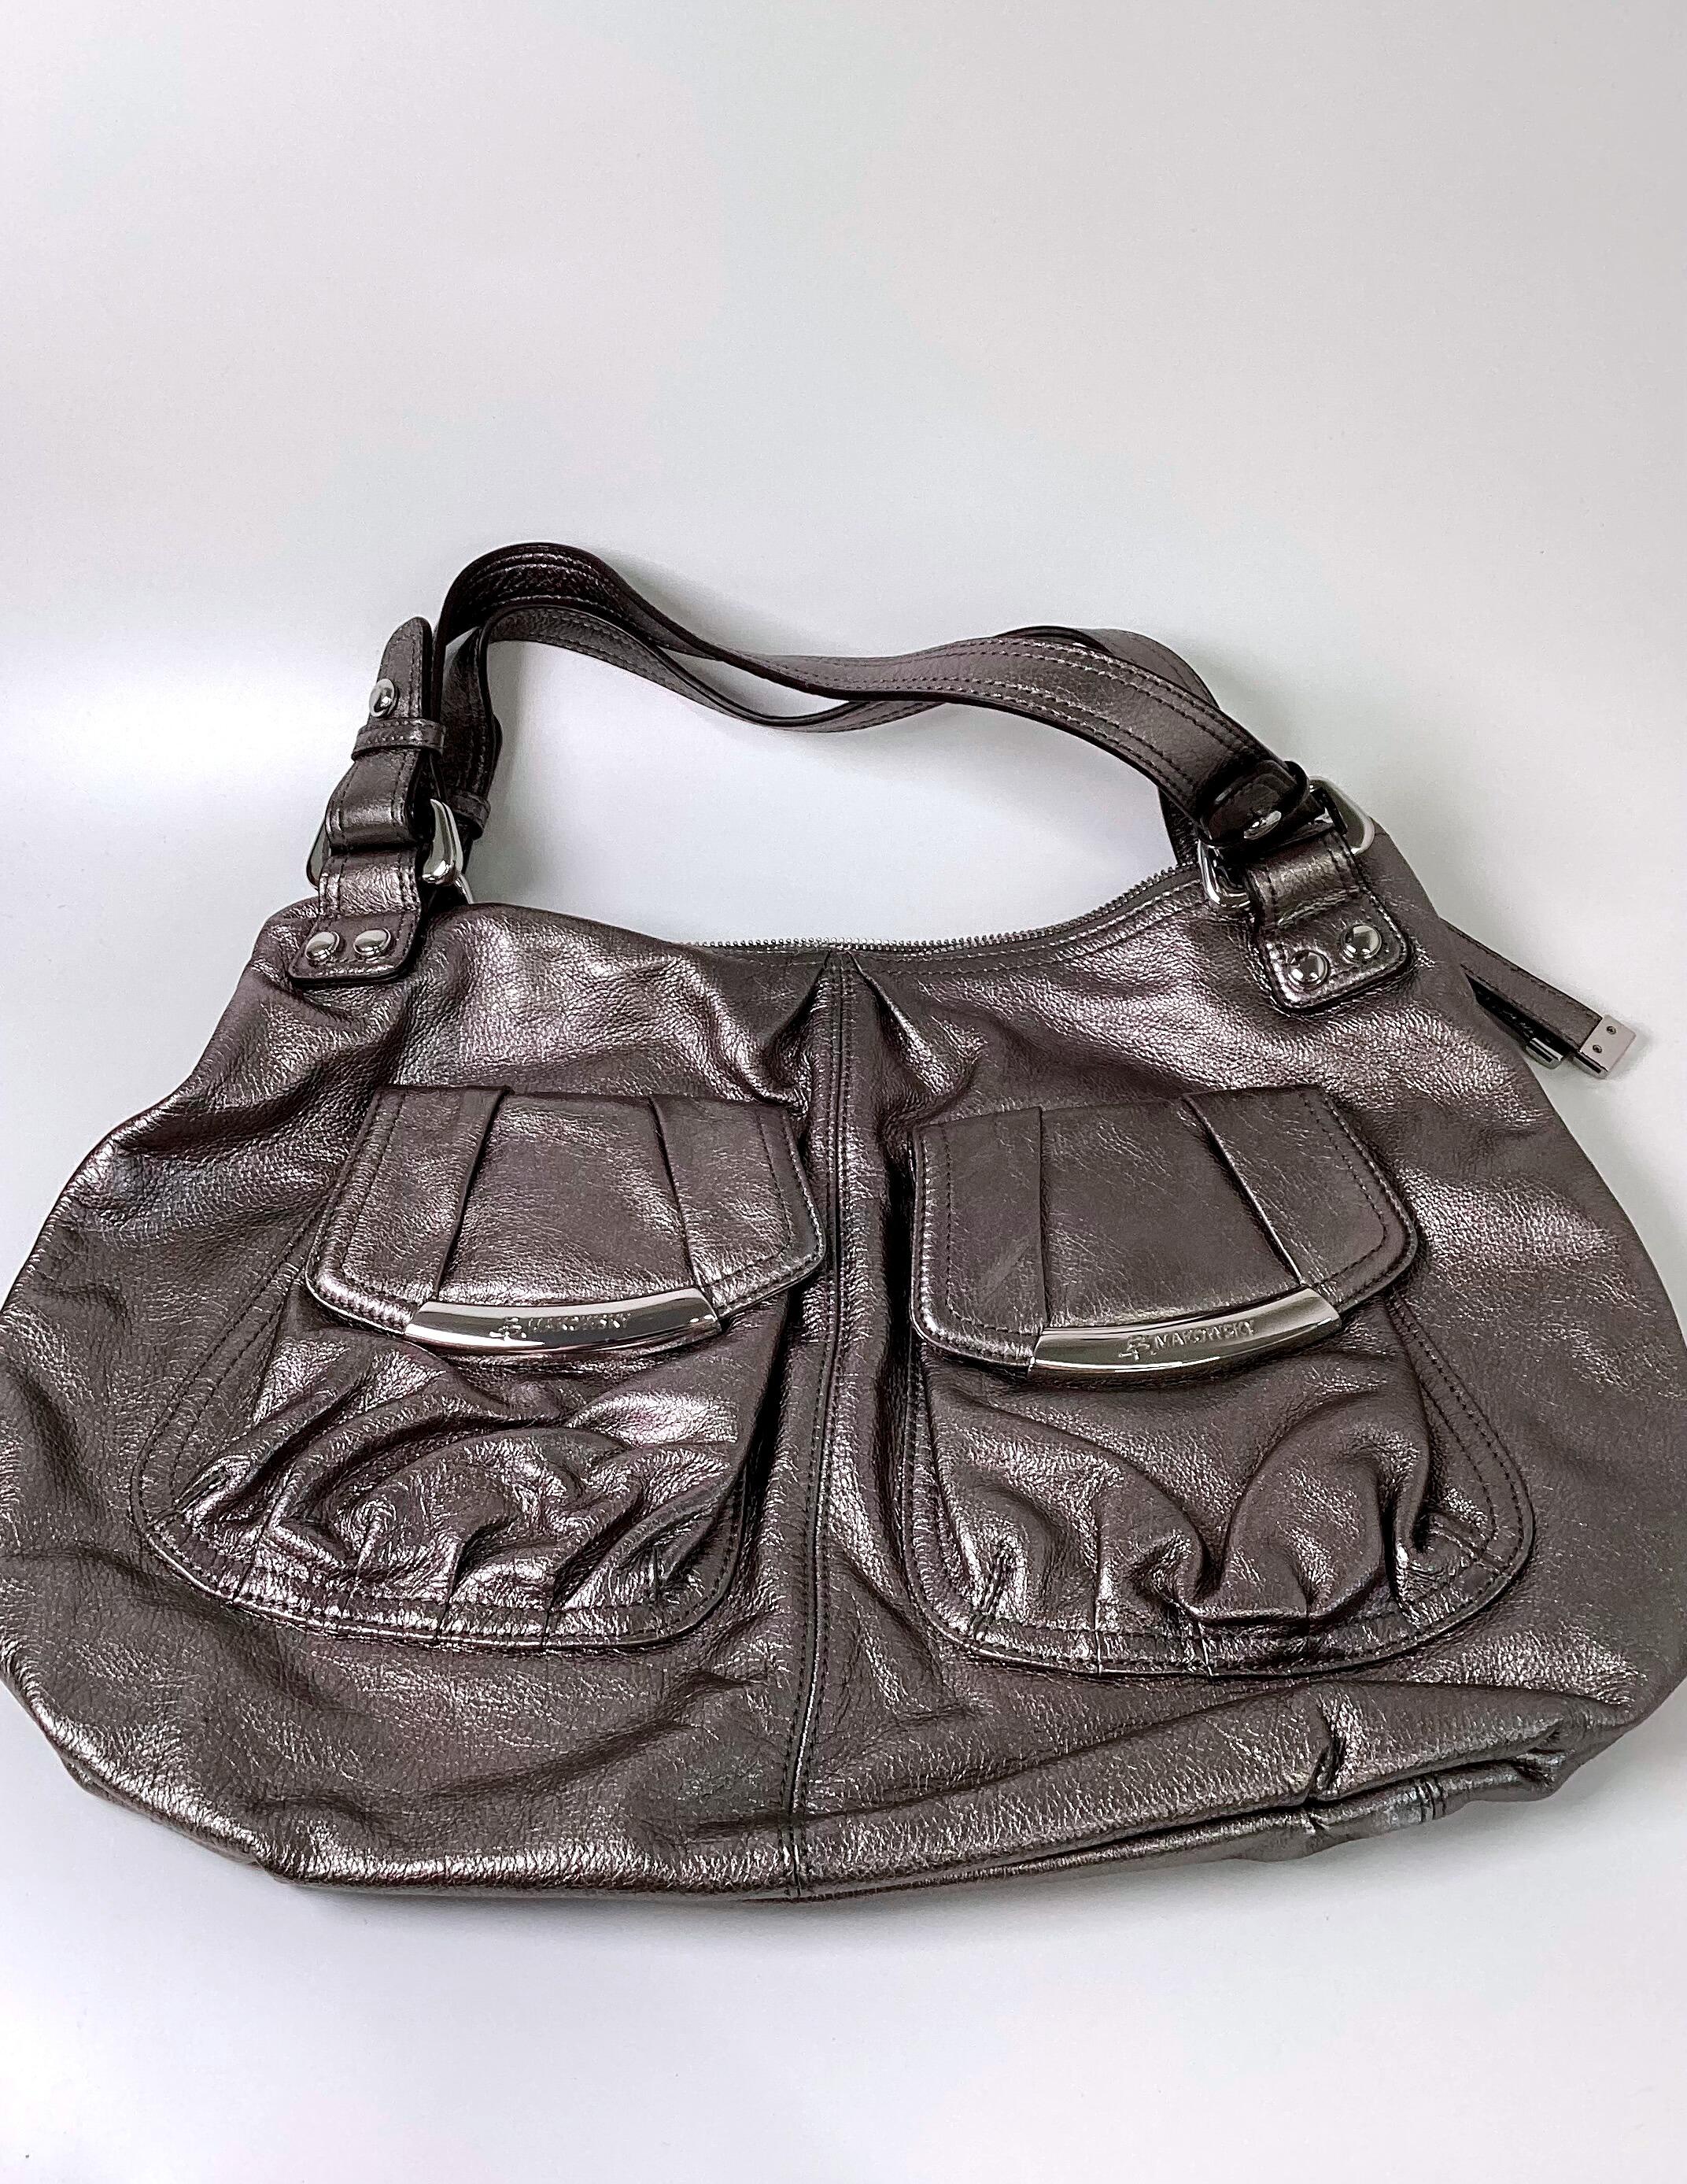 b. makowsky Strap Accent Hobo Bags for Women | Mercari